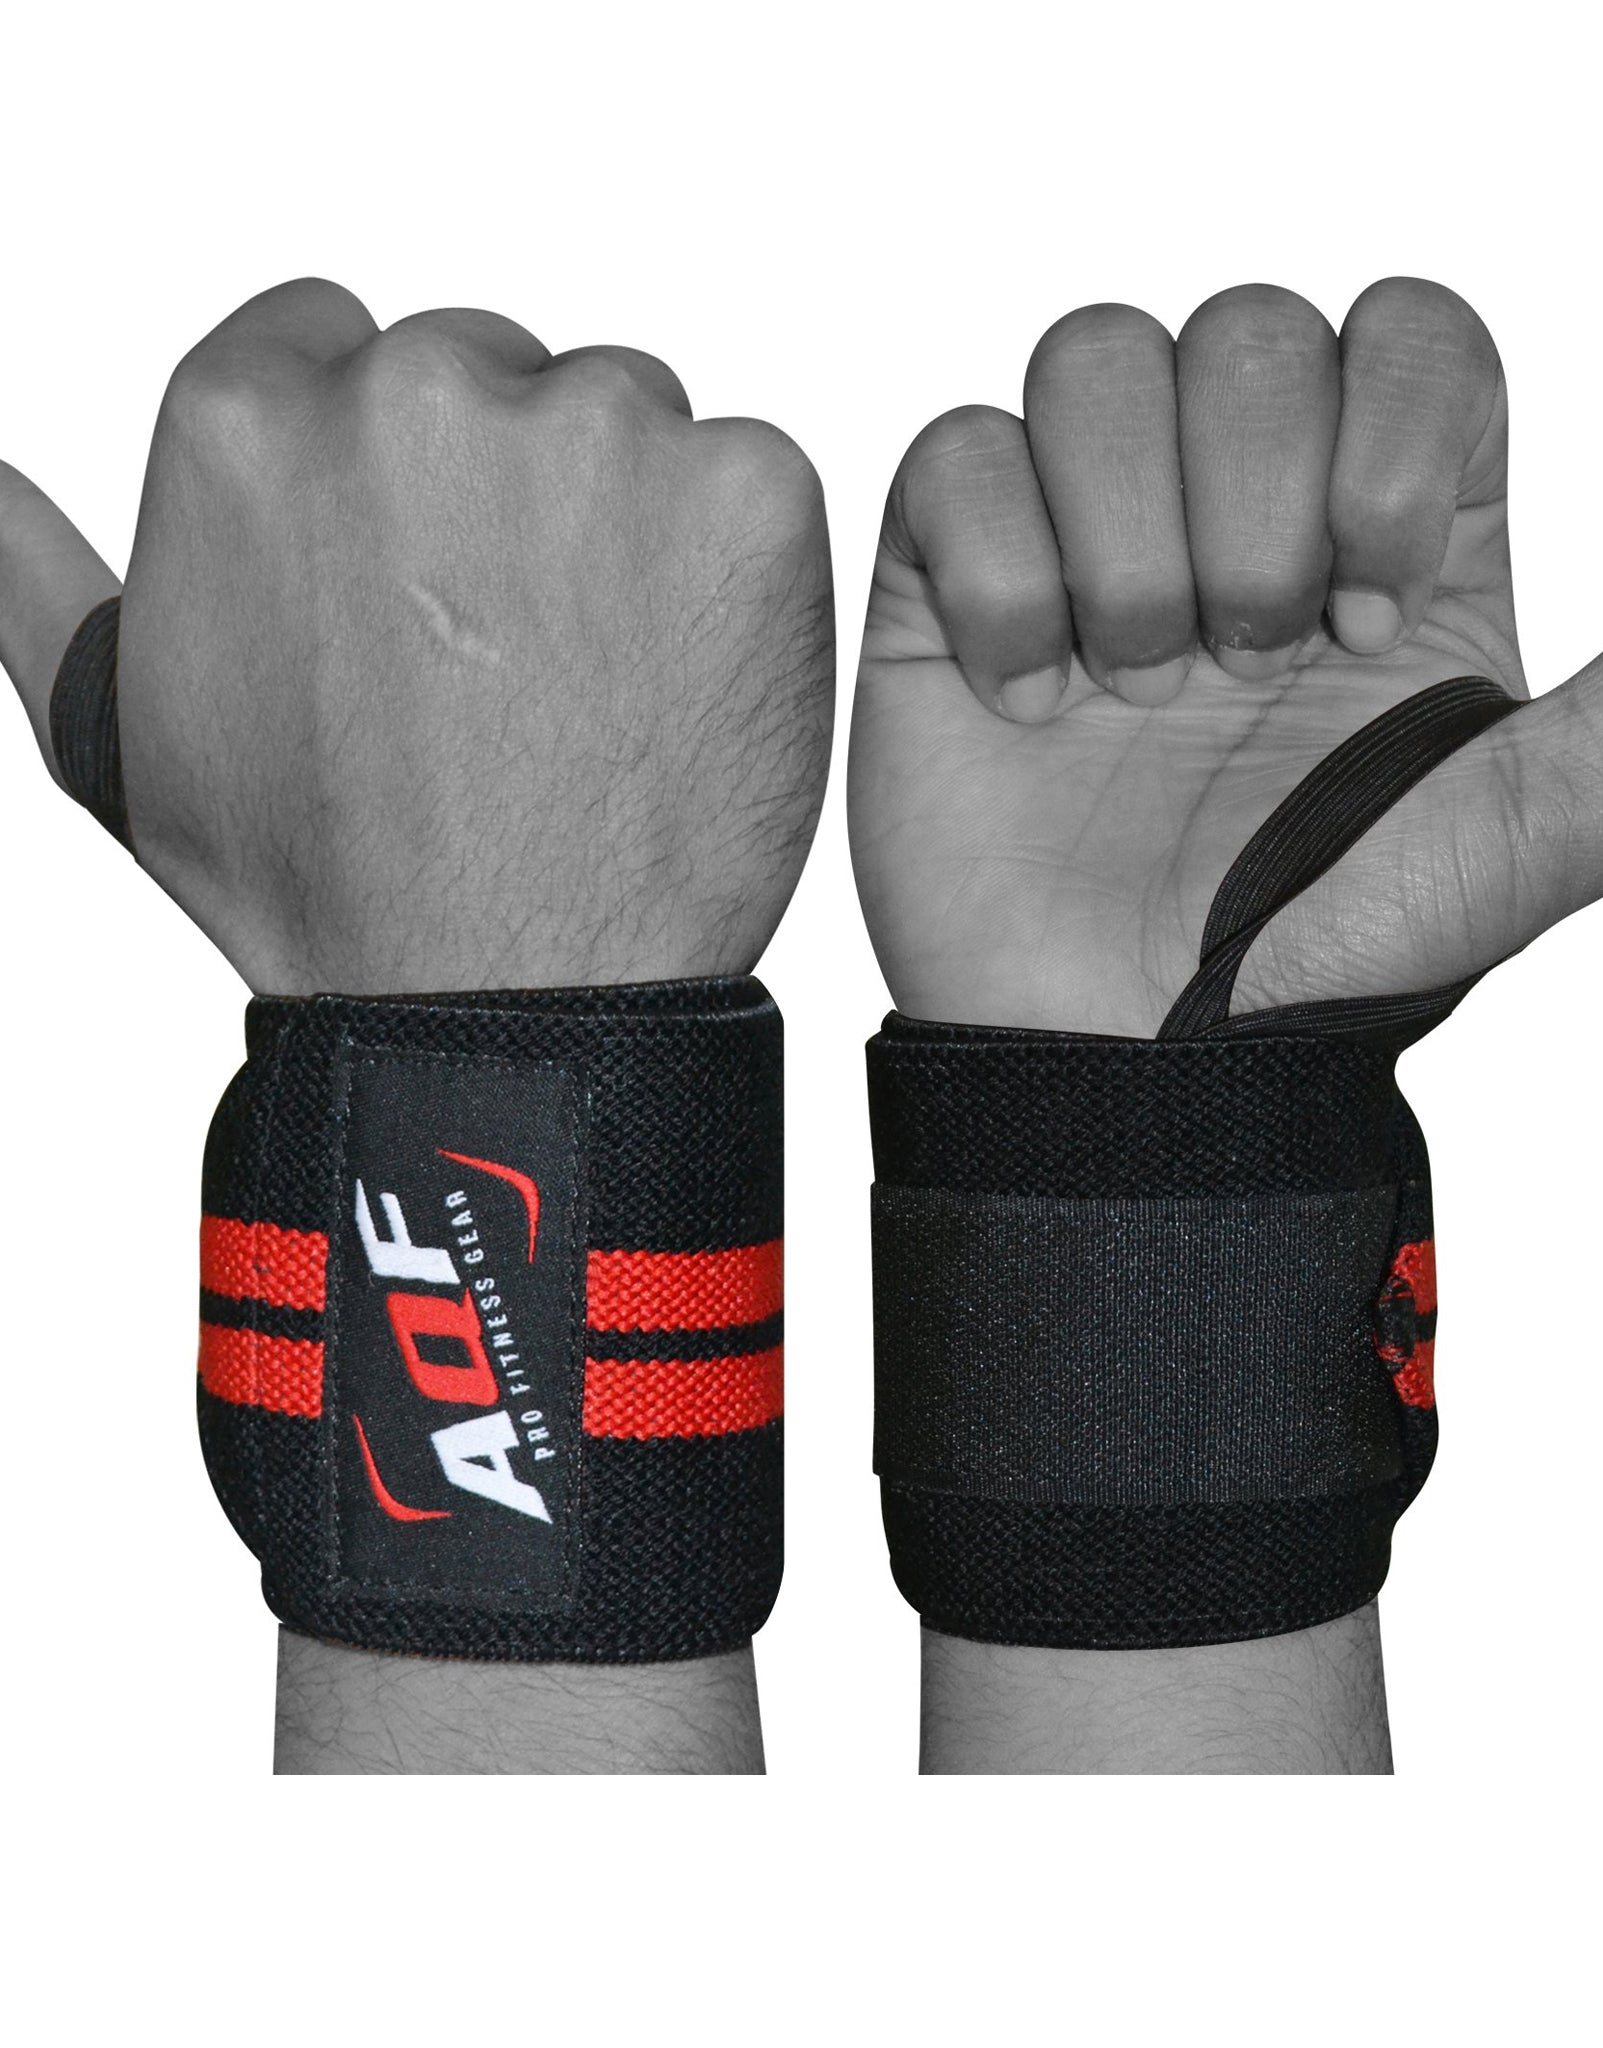 Black & Red AQF Weight Lifting Wrist Wraps Bandage 